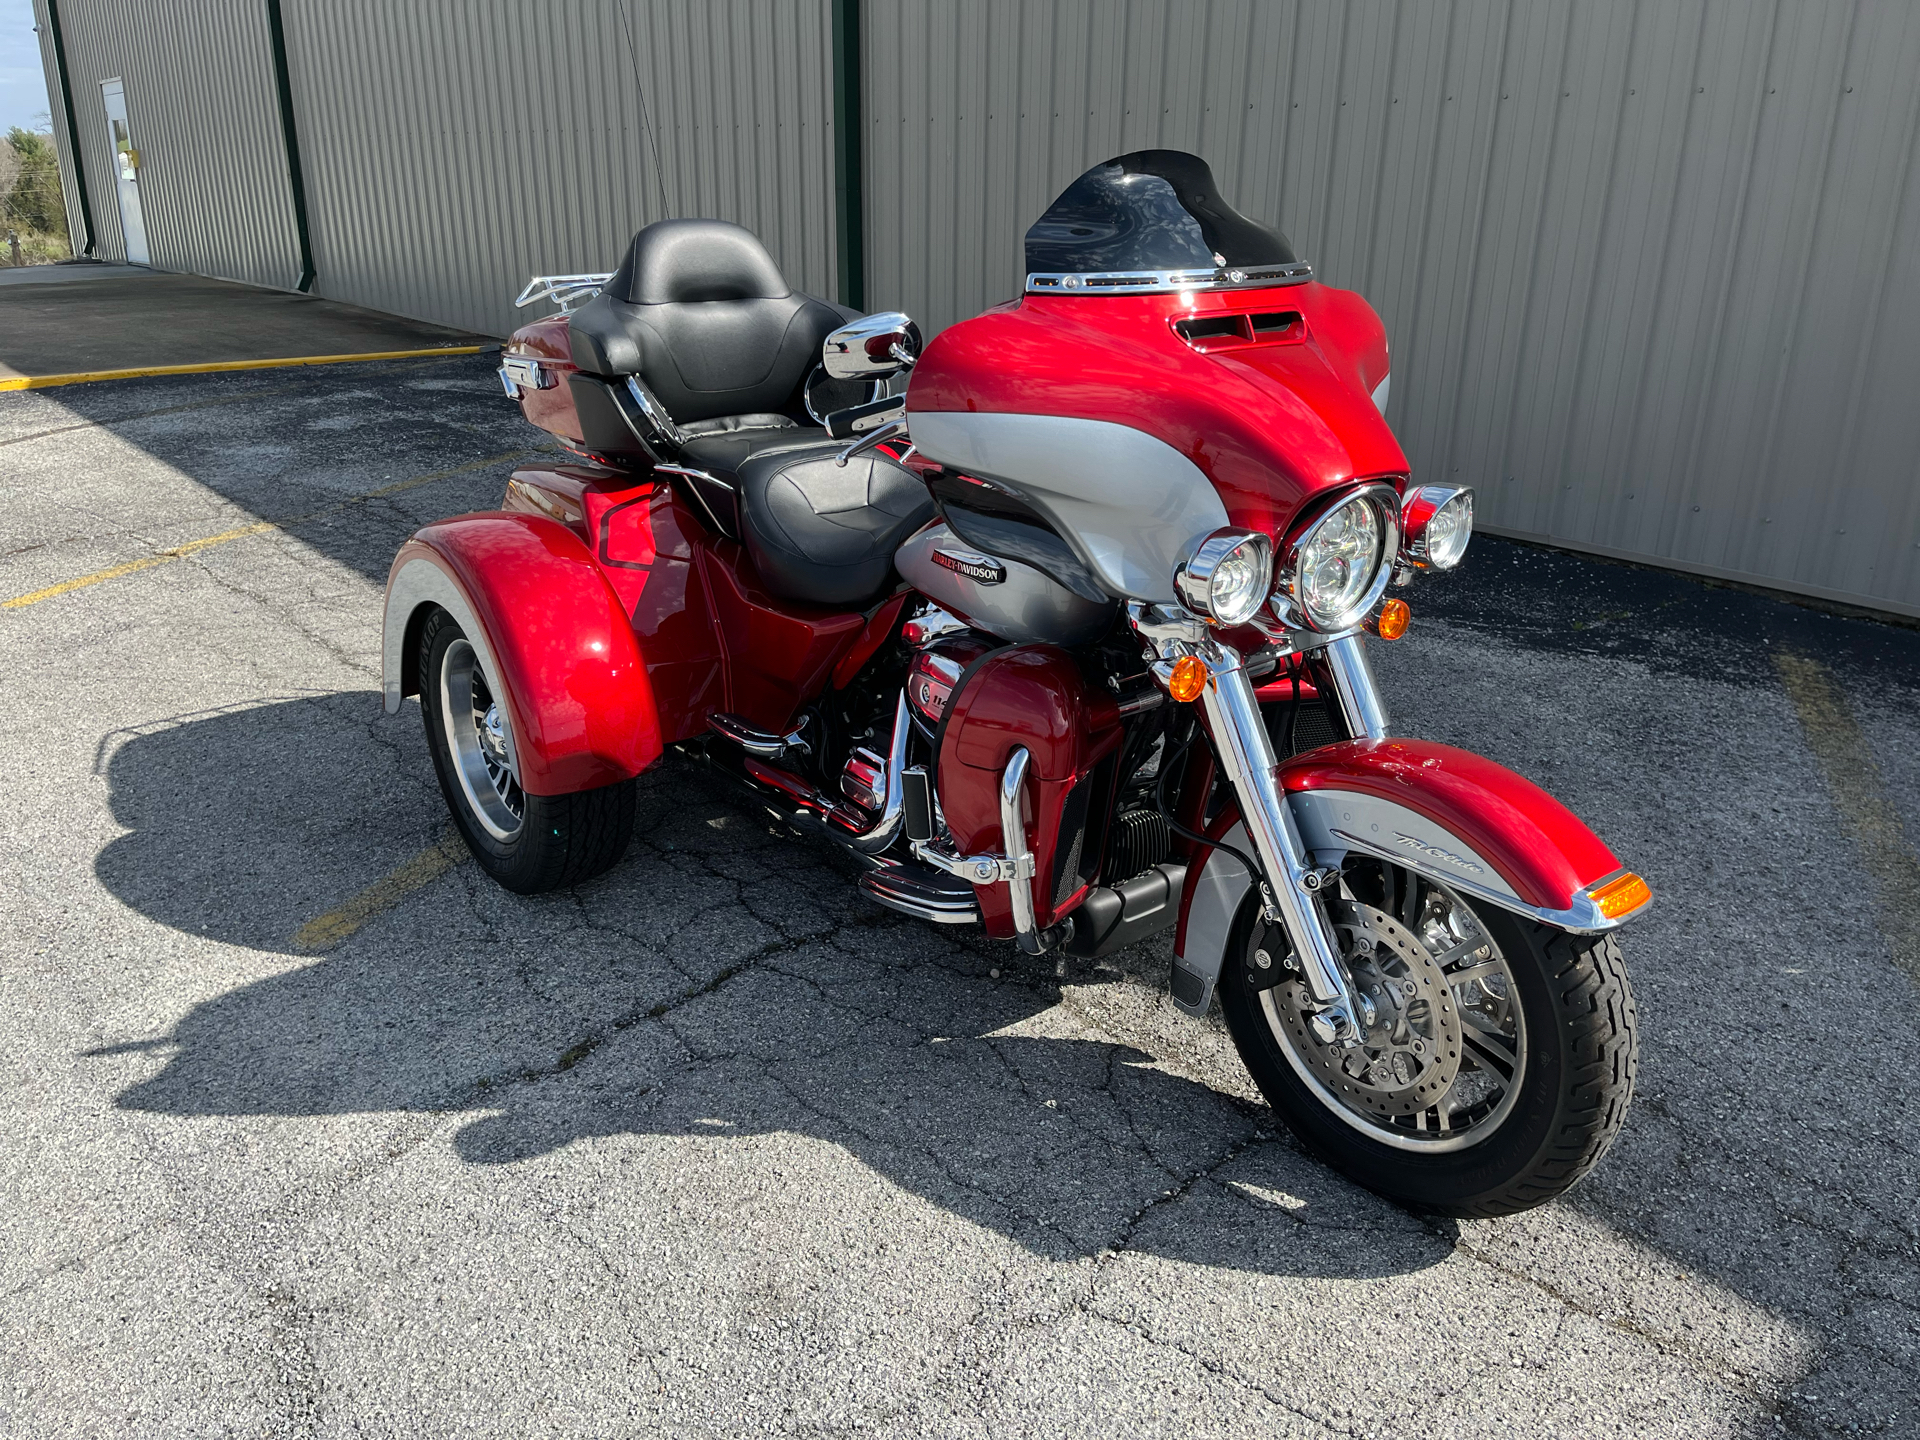 2019 Harley-Davidson Tri Glide® Ultra in Greeneville, Tennessee - Photo 1